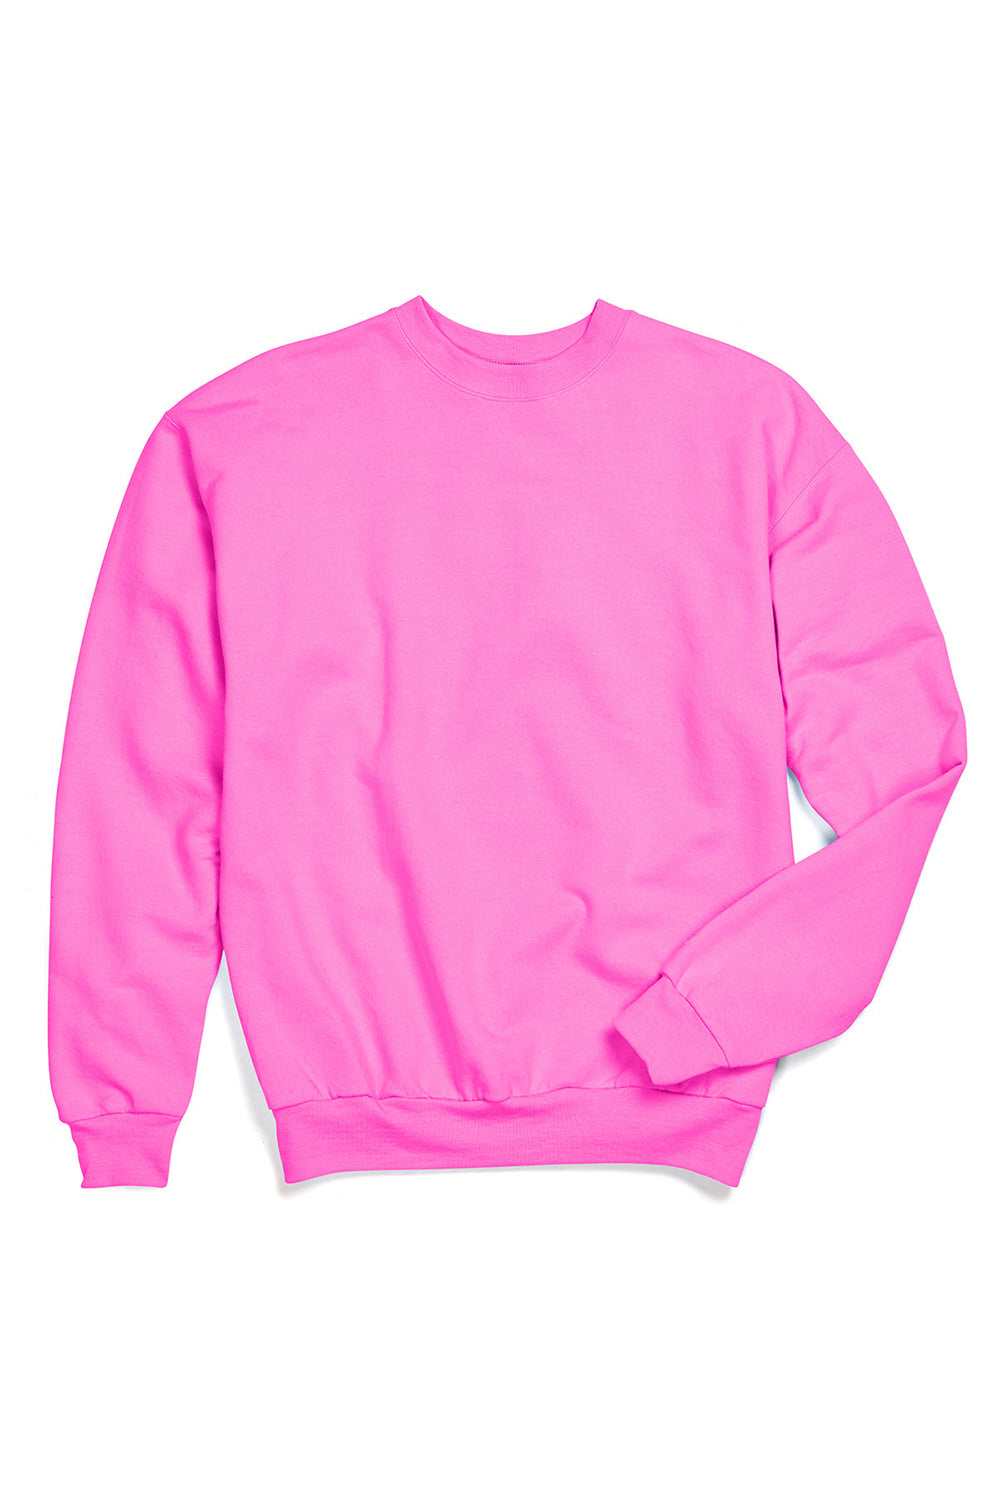 Hanes P160/P1607 Mens EcoSmart Print Pro XP Fleece Crewneck Sweatshirt Safety Pink Flat Front